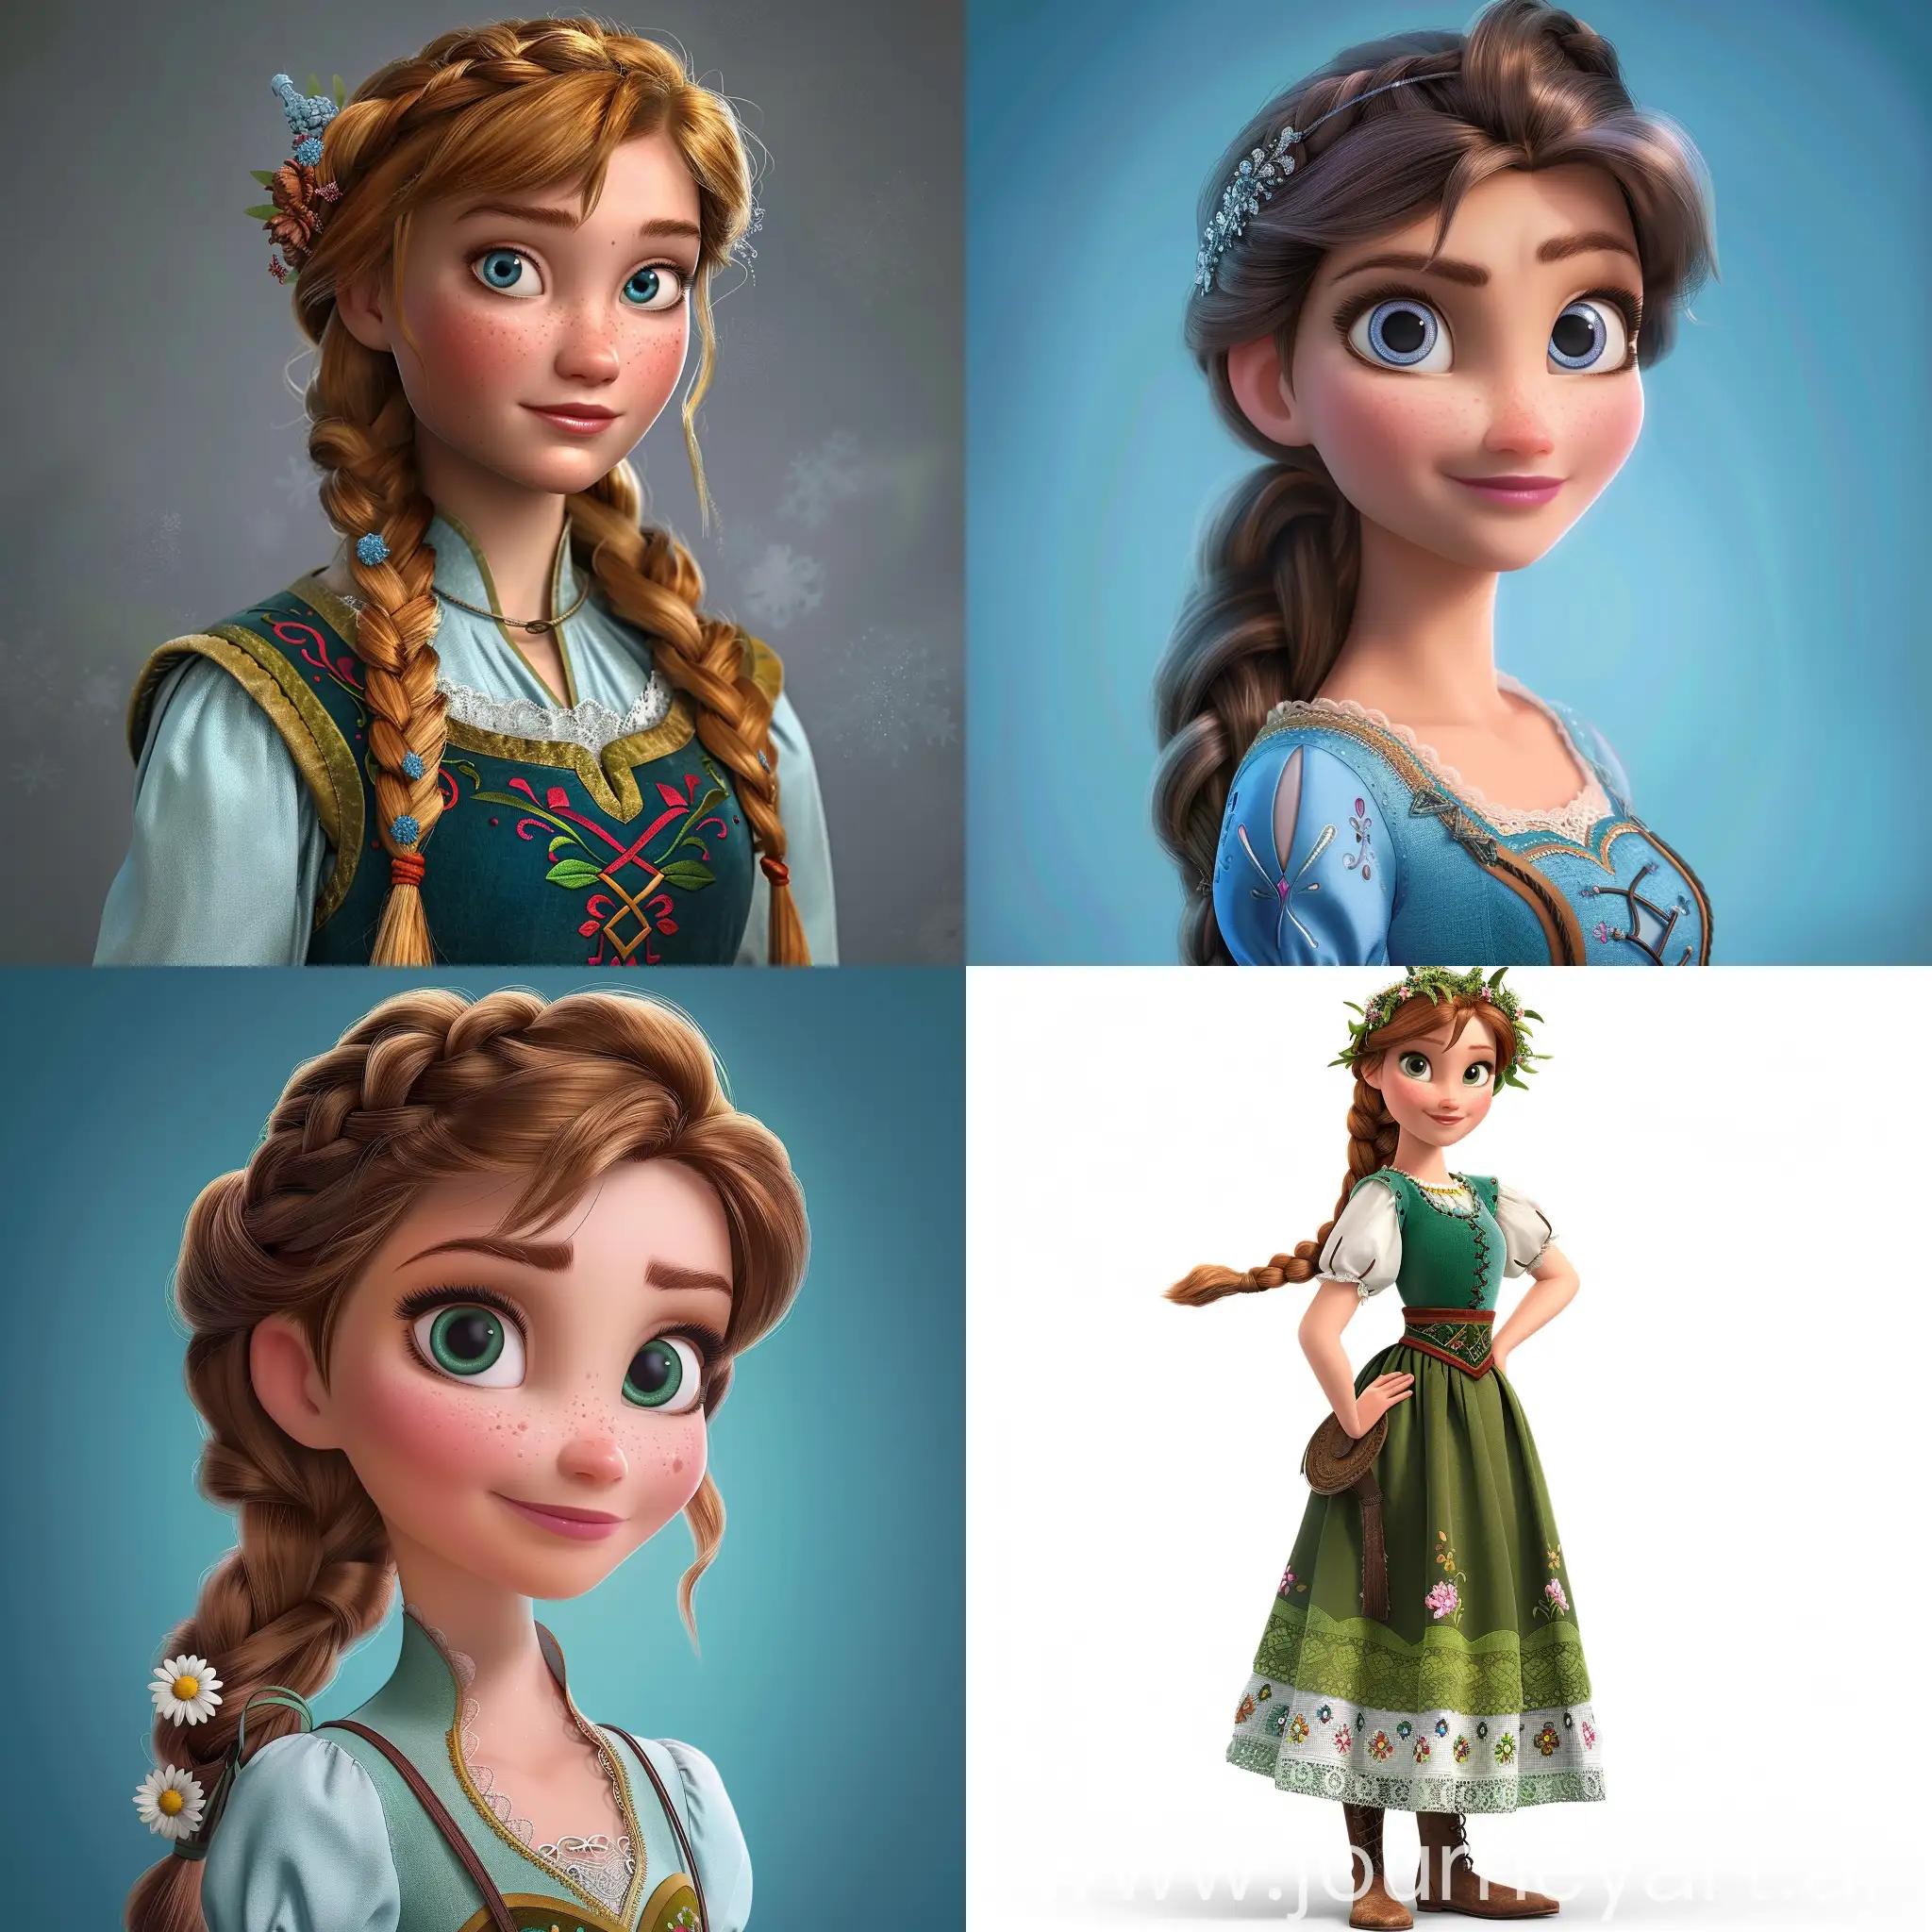 Disney princess named Josefine from Sweden pister